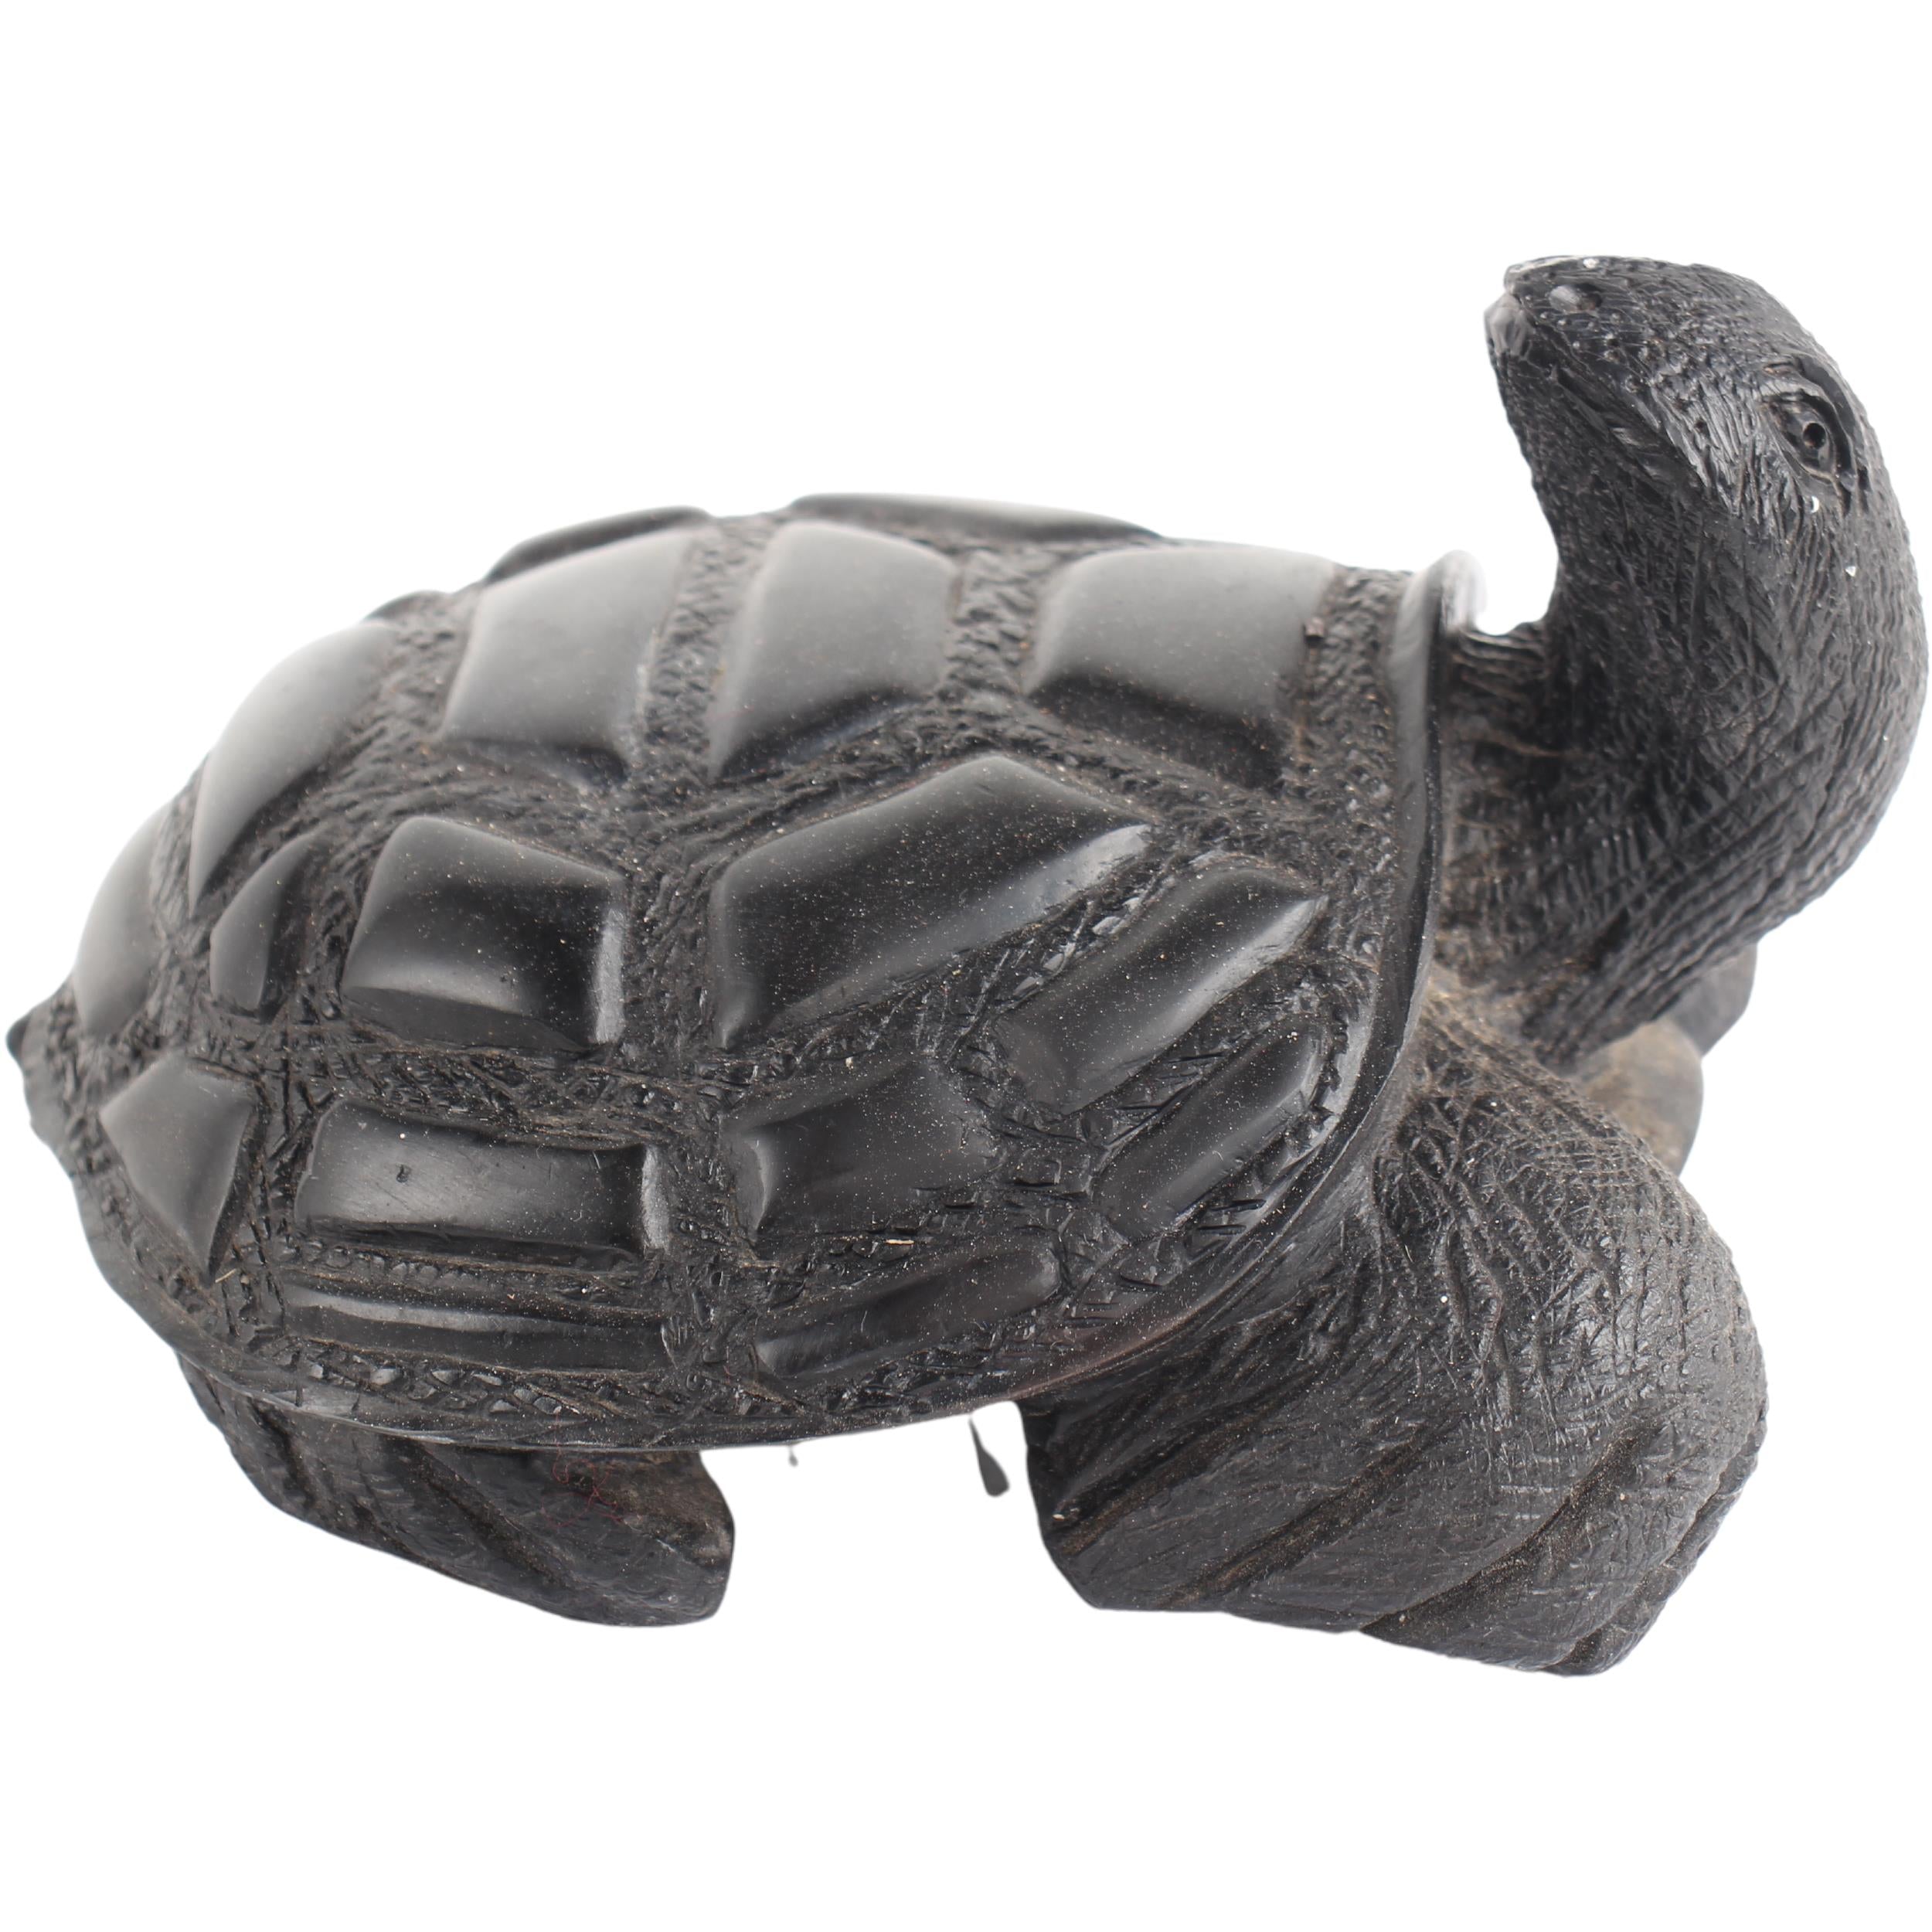 Shona Tribe Serpentine Stone Tortoise ~5.5" Tall